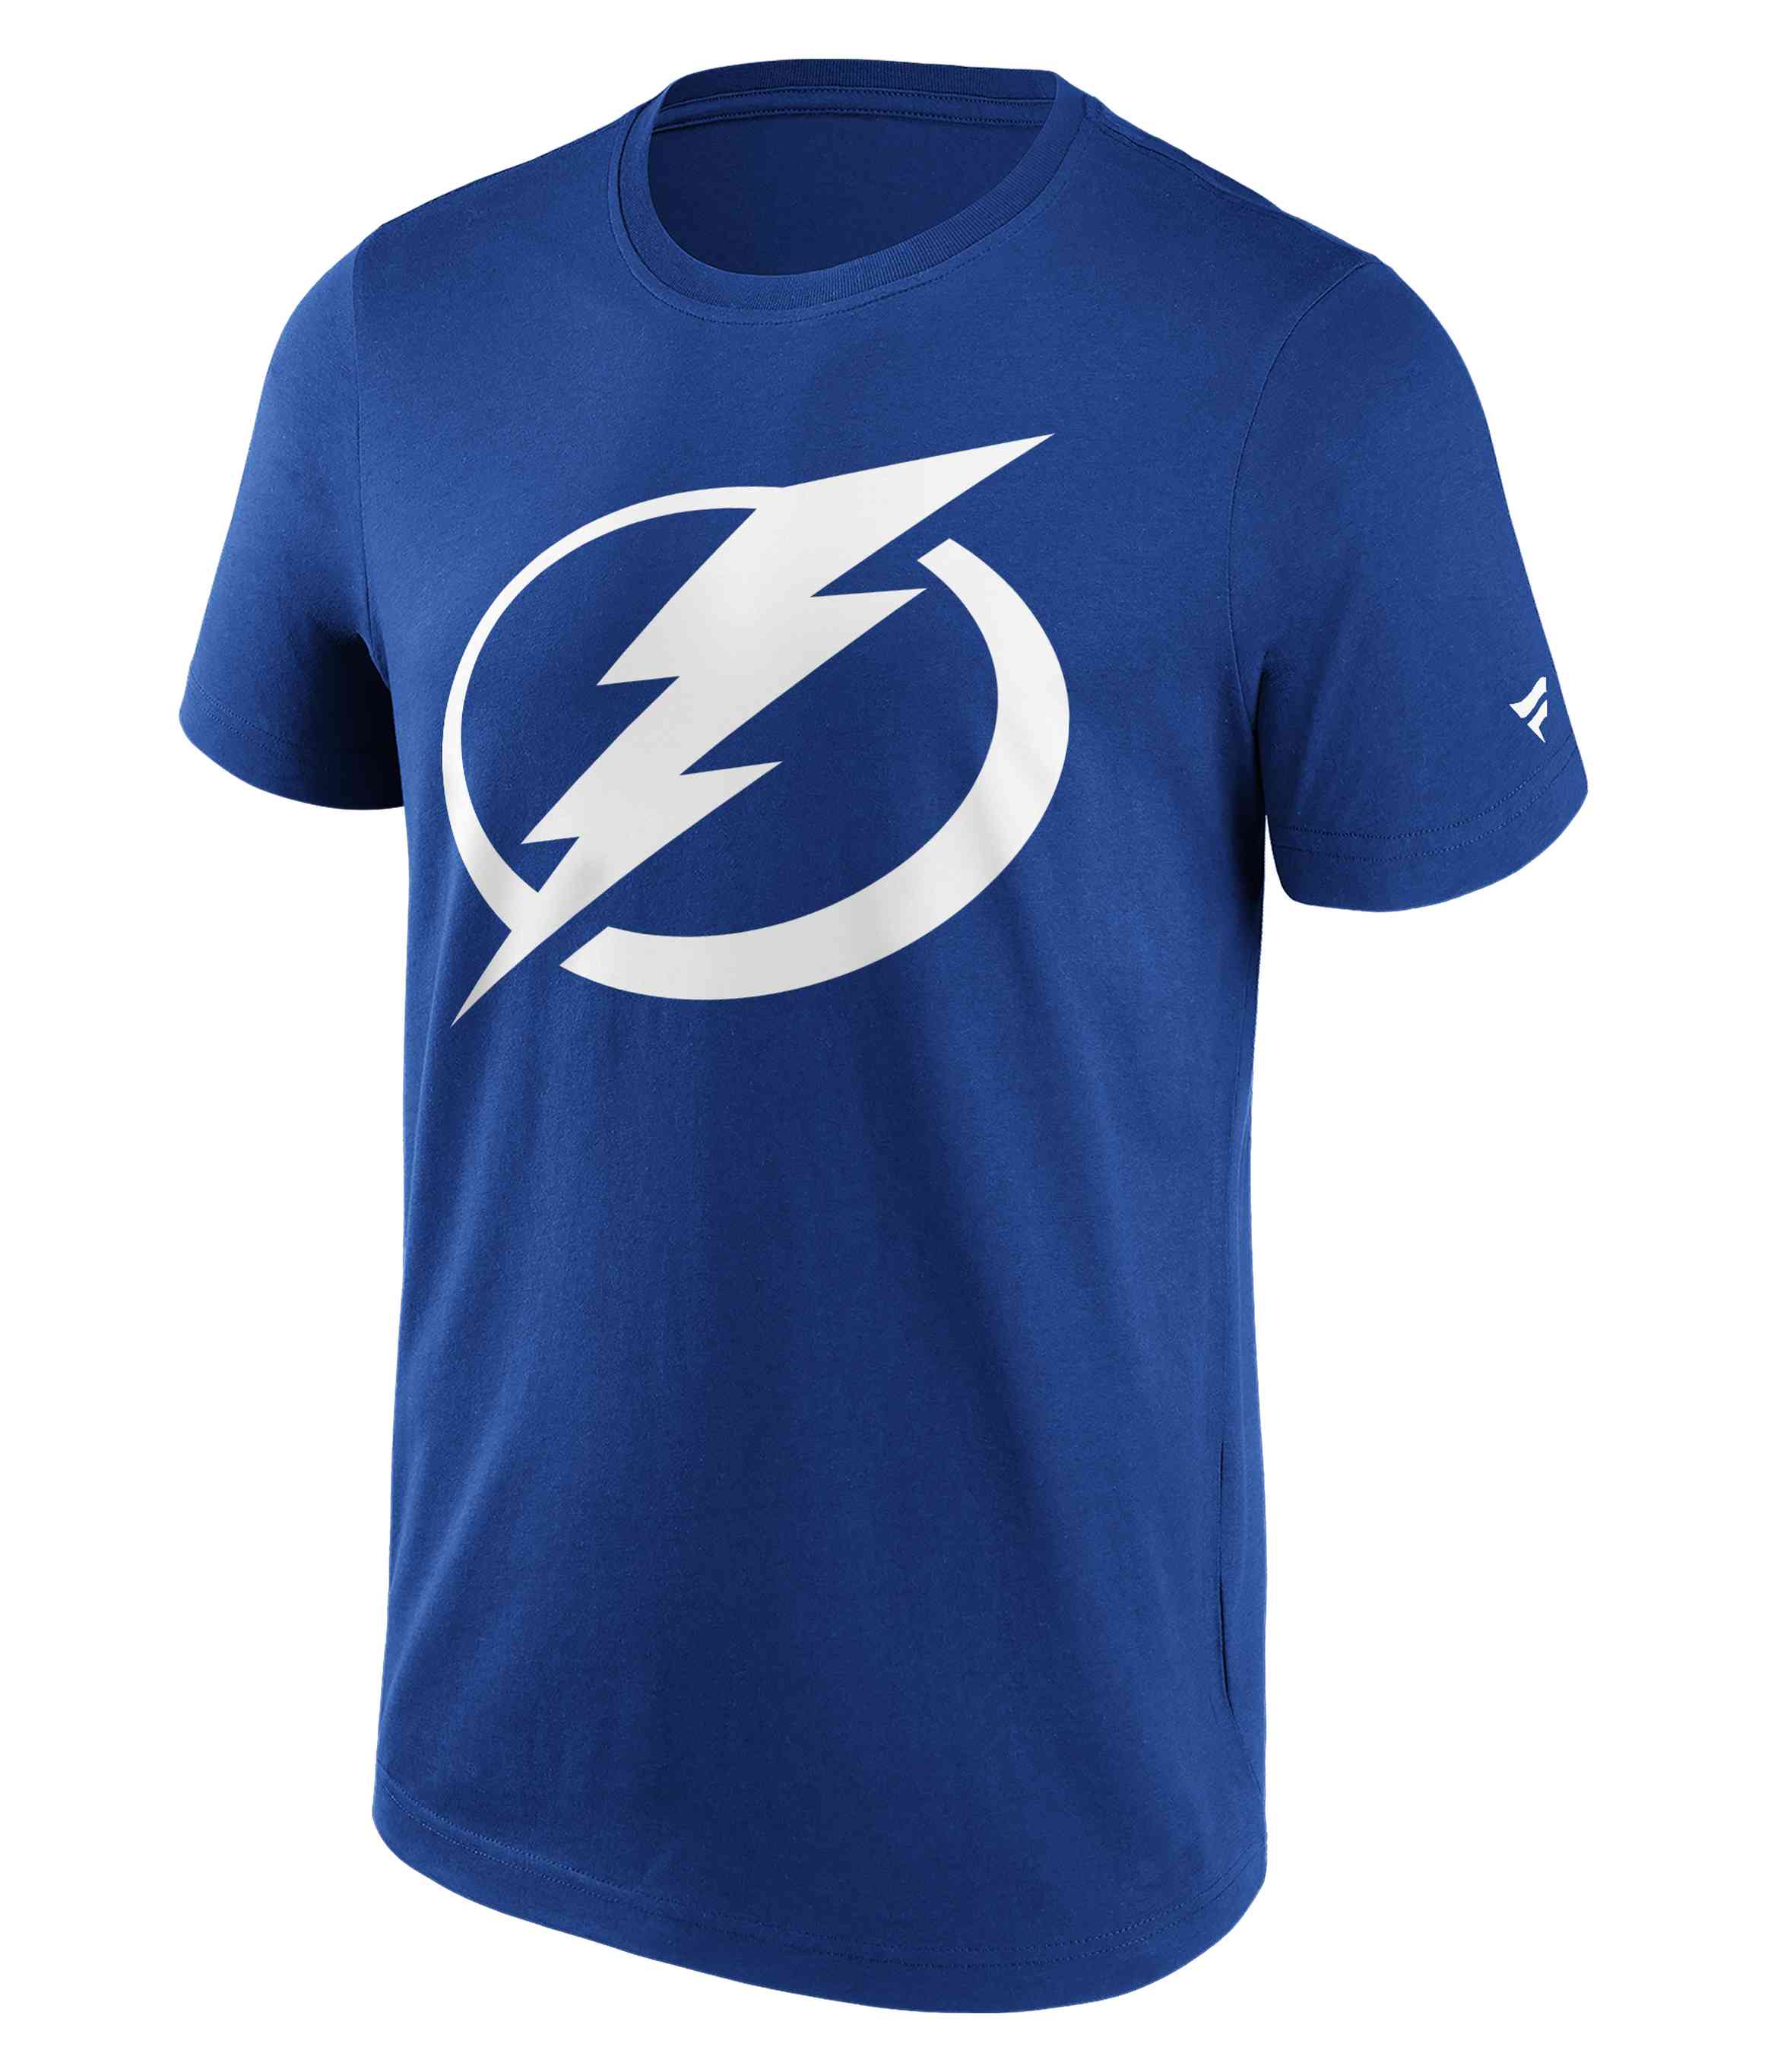 Fanatics - NHL Tampa Bay Lightning Primary Logo Graphic T-Shirt